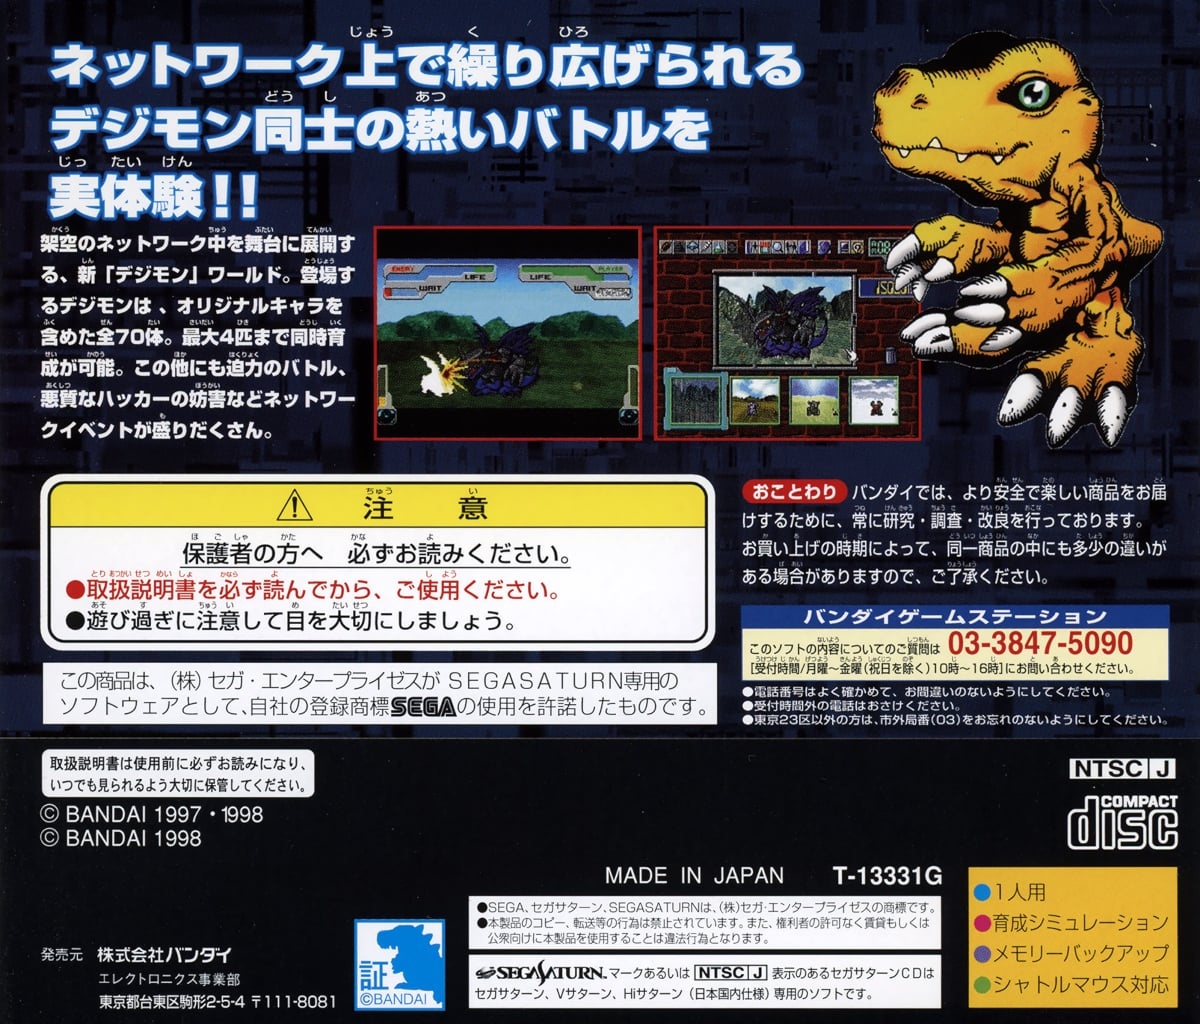 Digital Monster Ver. S Digimon Tamers cover